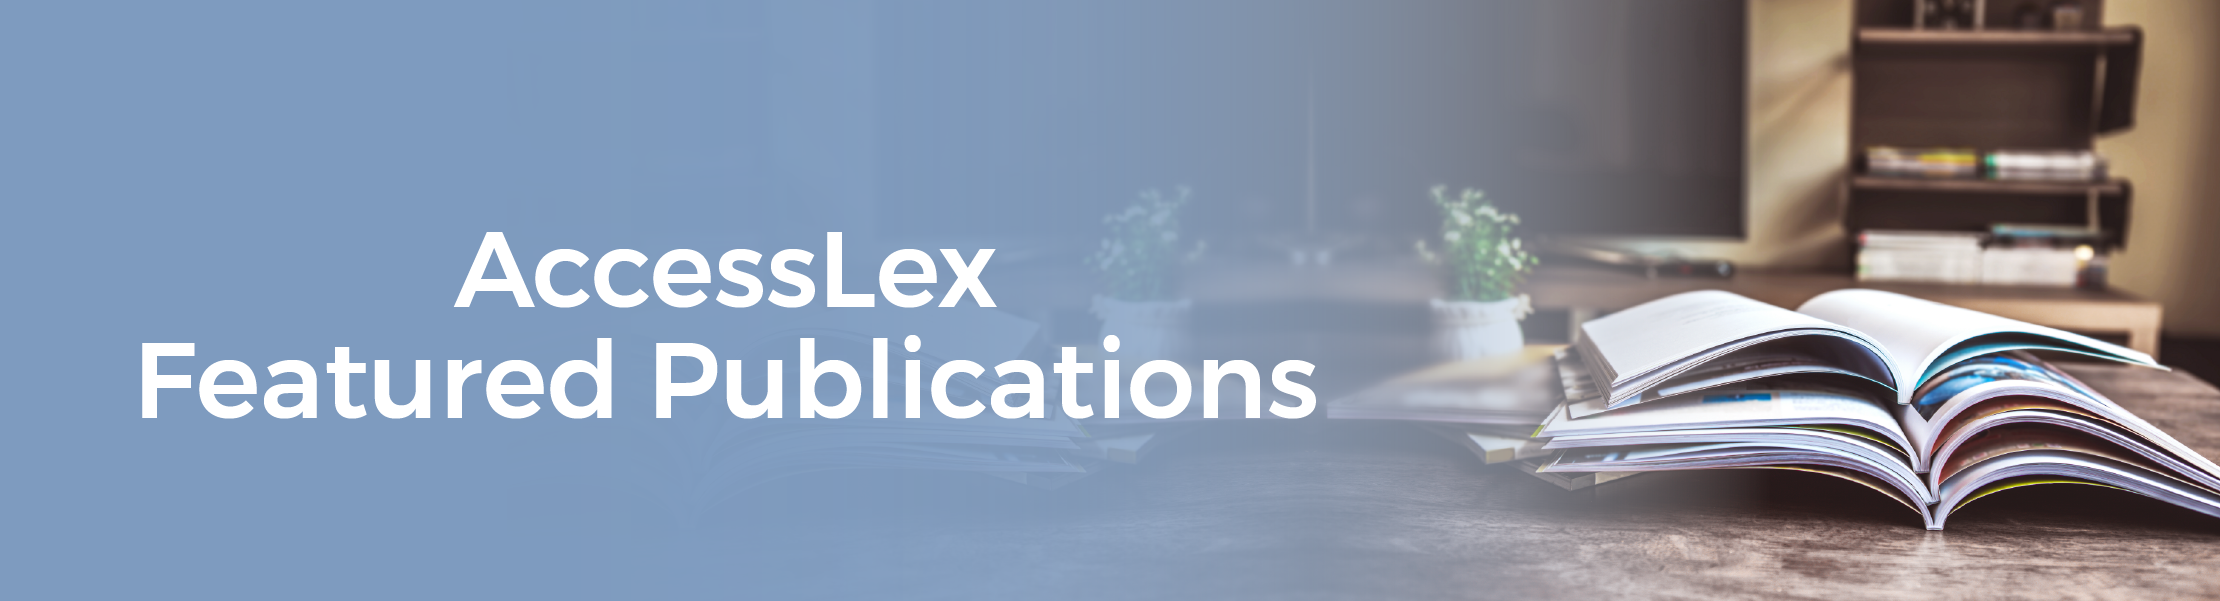 AccessLex Featured Publications